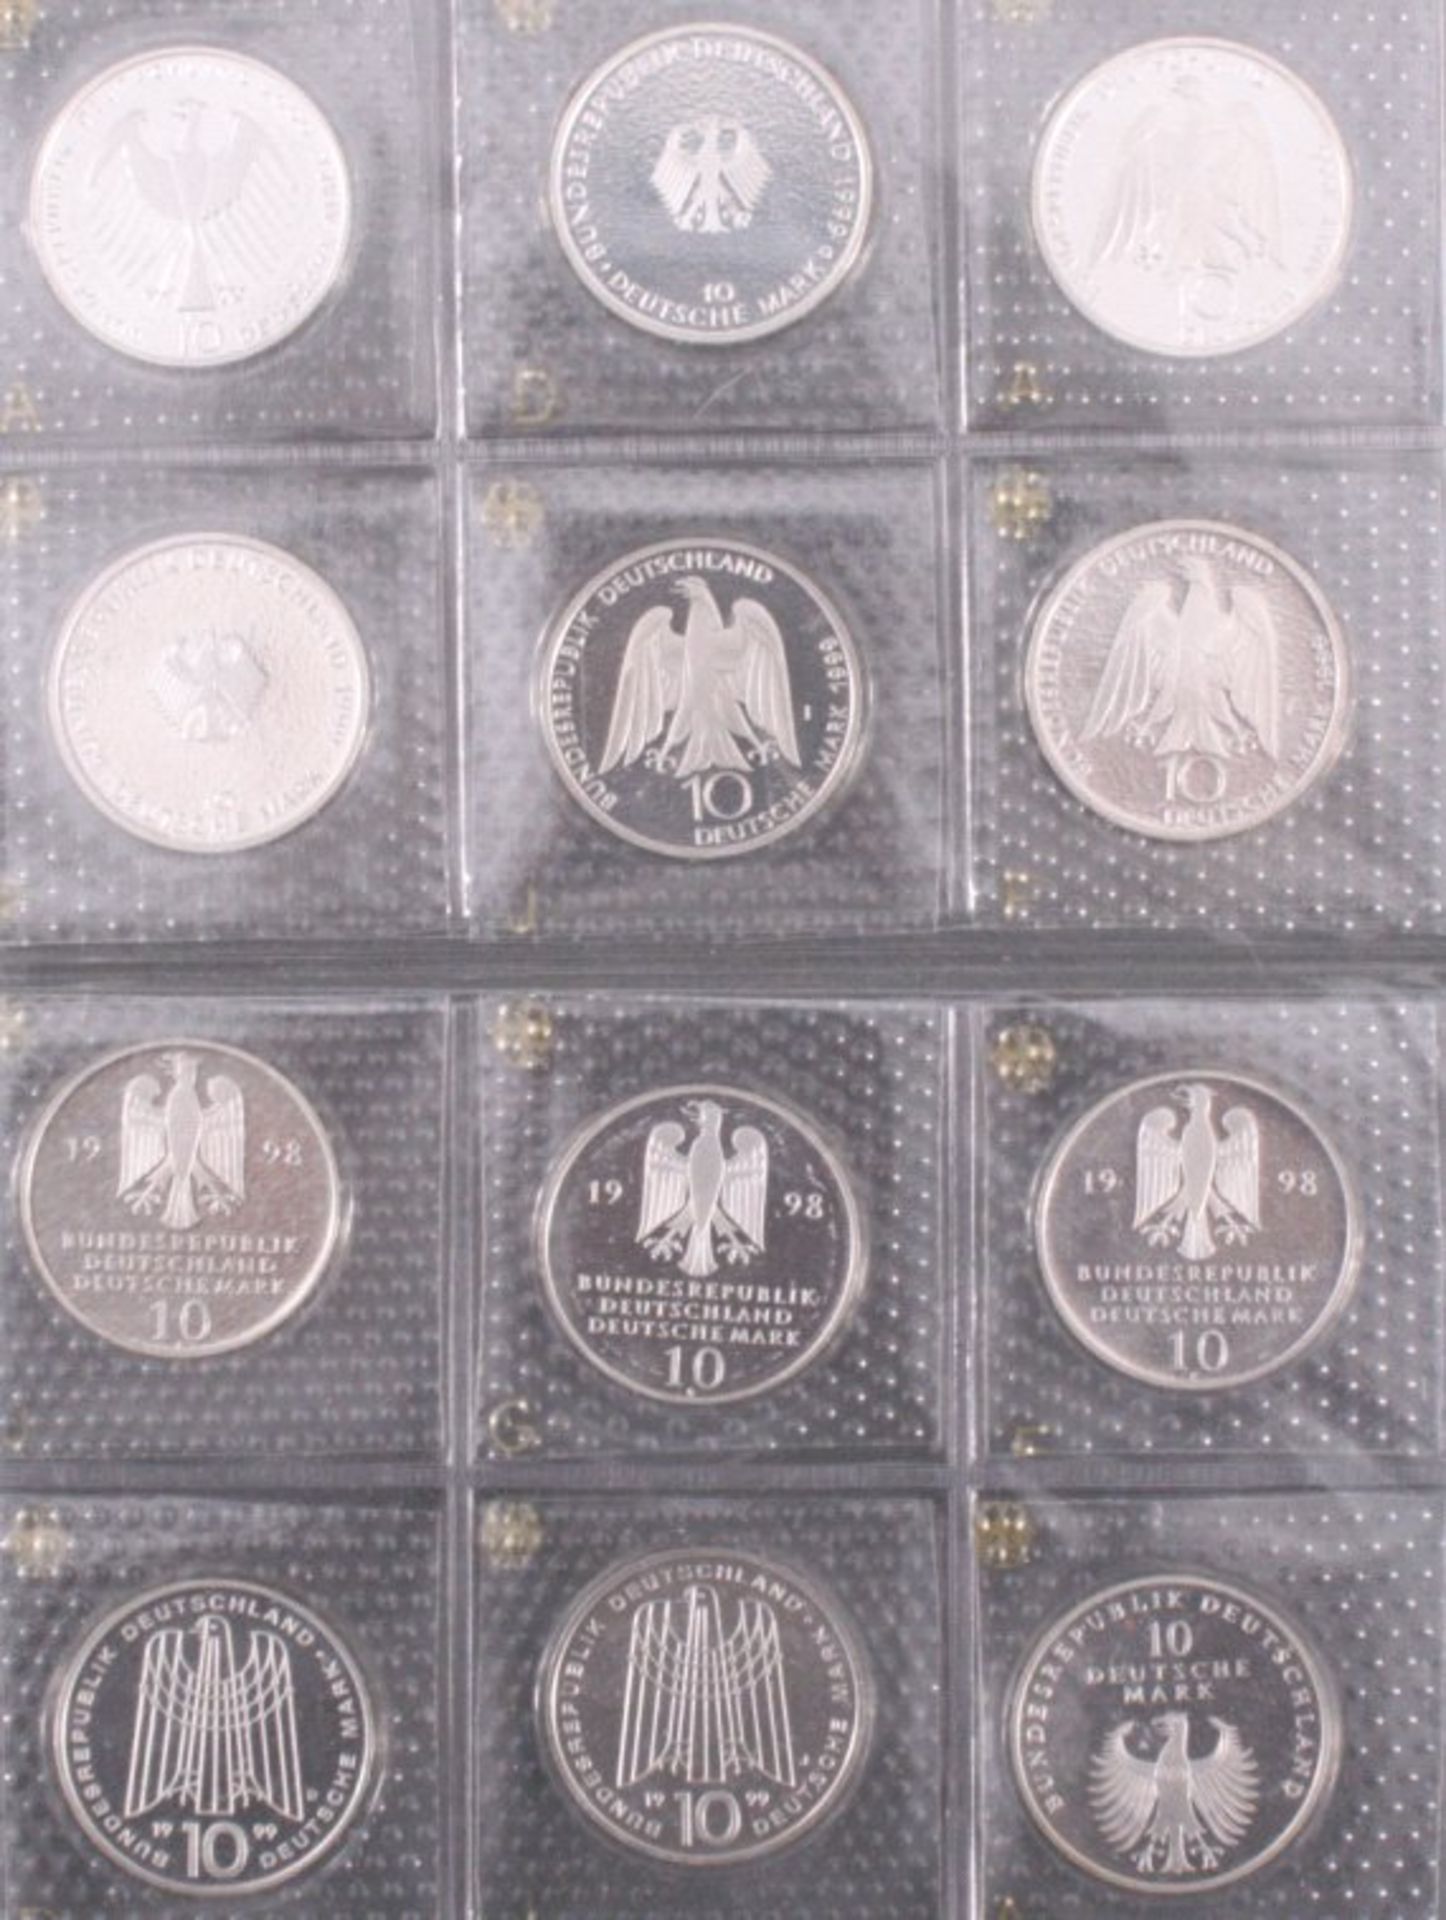 12 x 10 DM Gedenkmünzen pp orginal verschweißt1 x Deutsche Mark3 x Weimar2 x SOS Kinderdörfer2 x